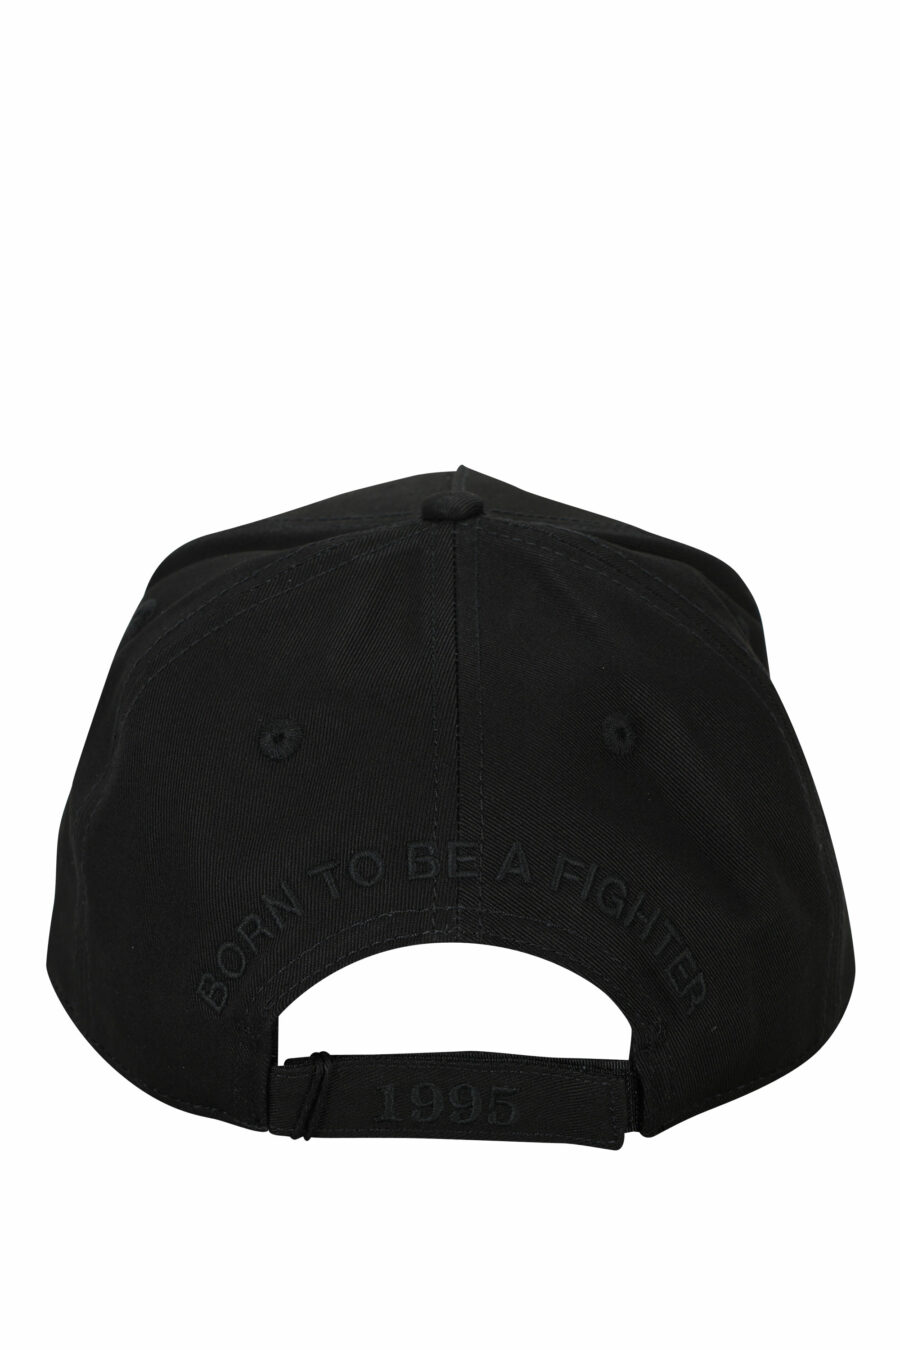 Black cap with monochrome square logo - 8055777286487 1